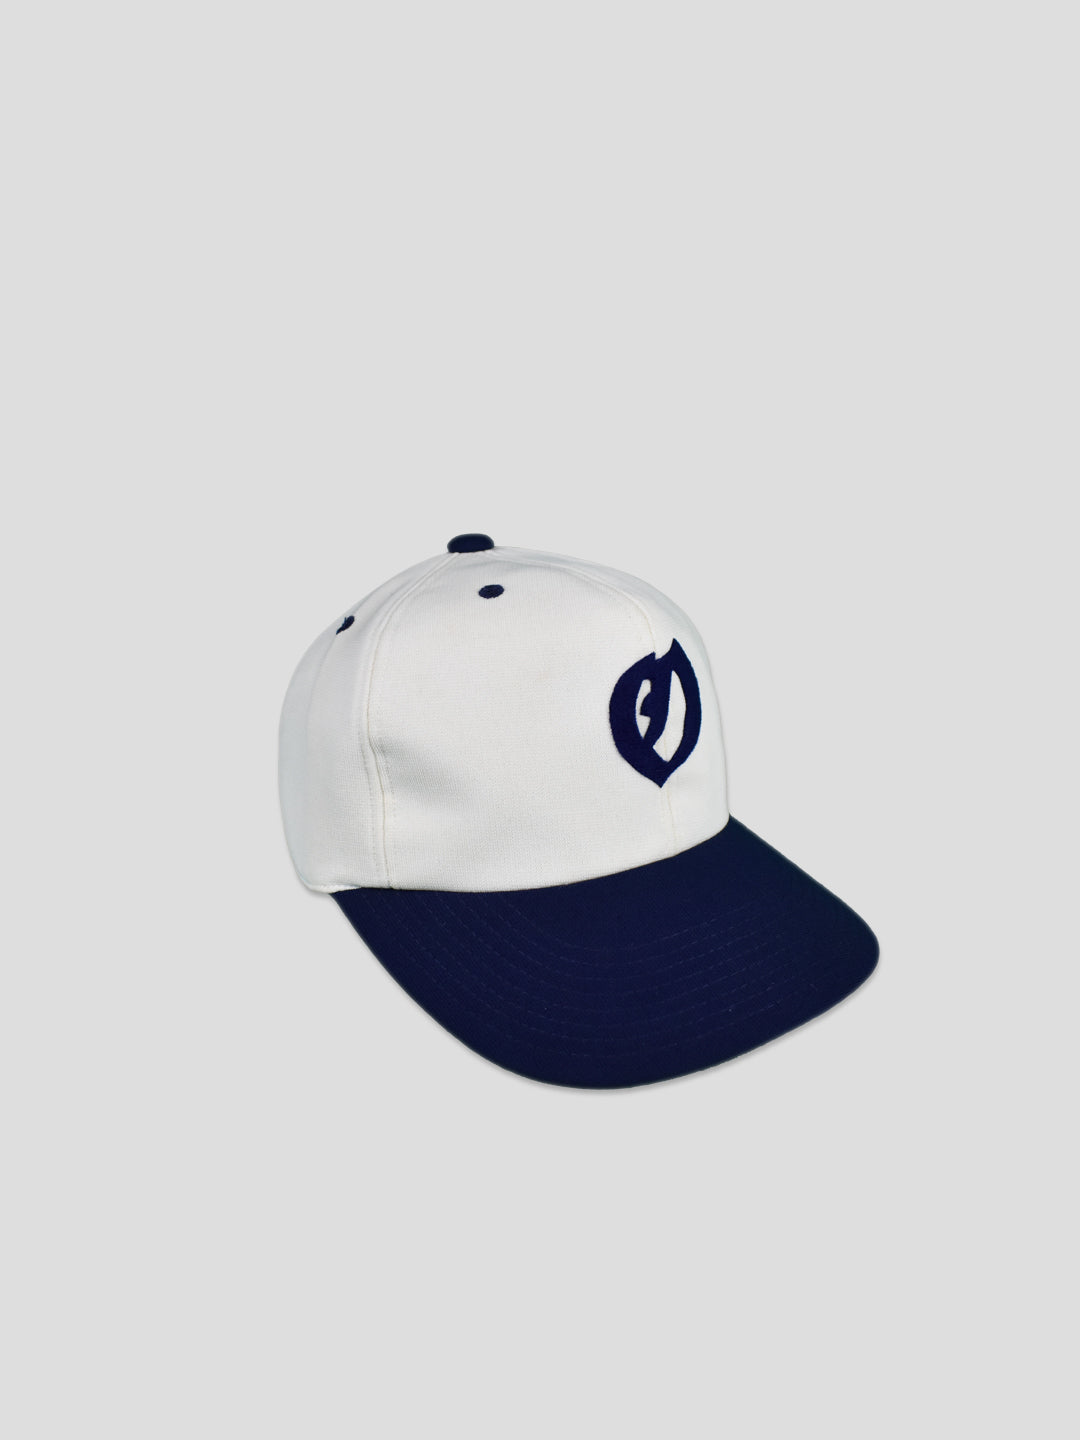 'O' Deadstock Fitted Baseball Cap